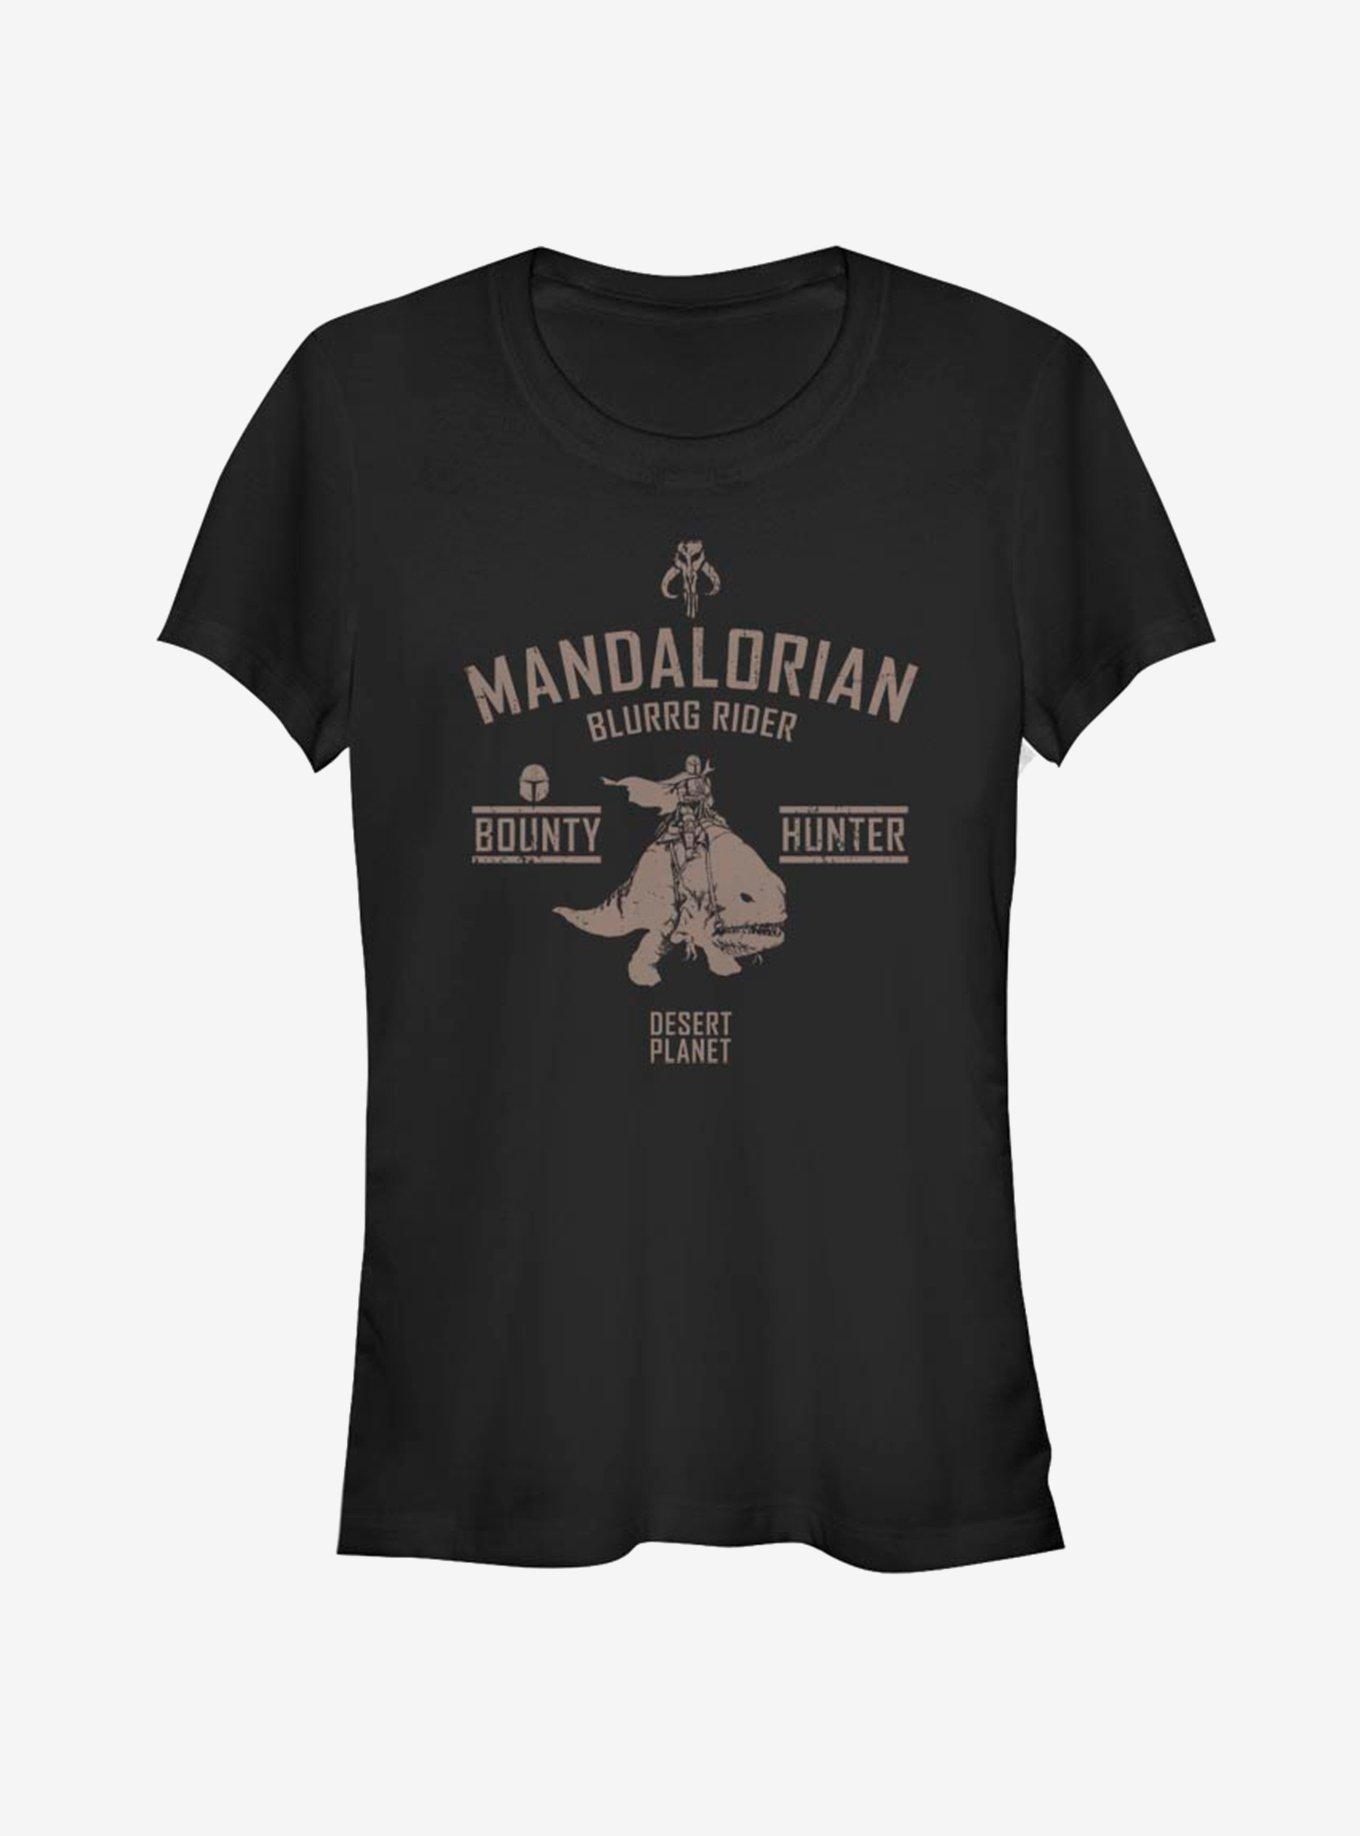 The Mandalorian Blurrg Rider Girls T-Shirt